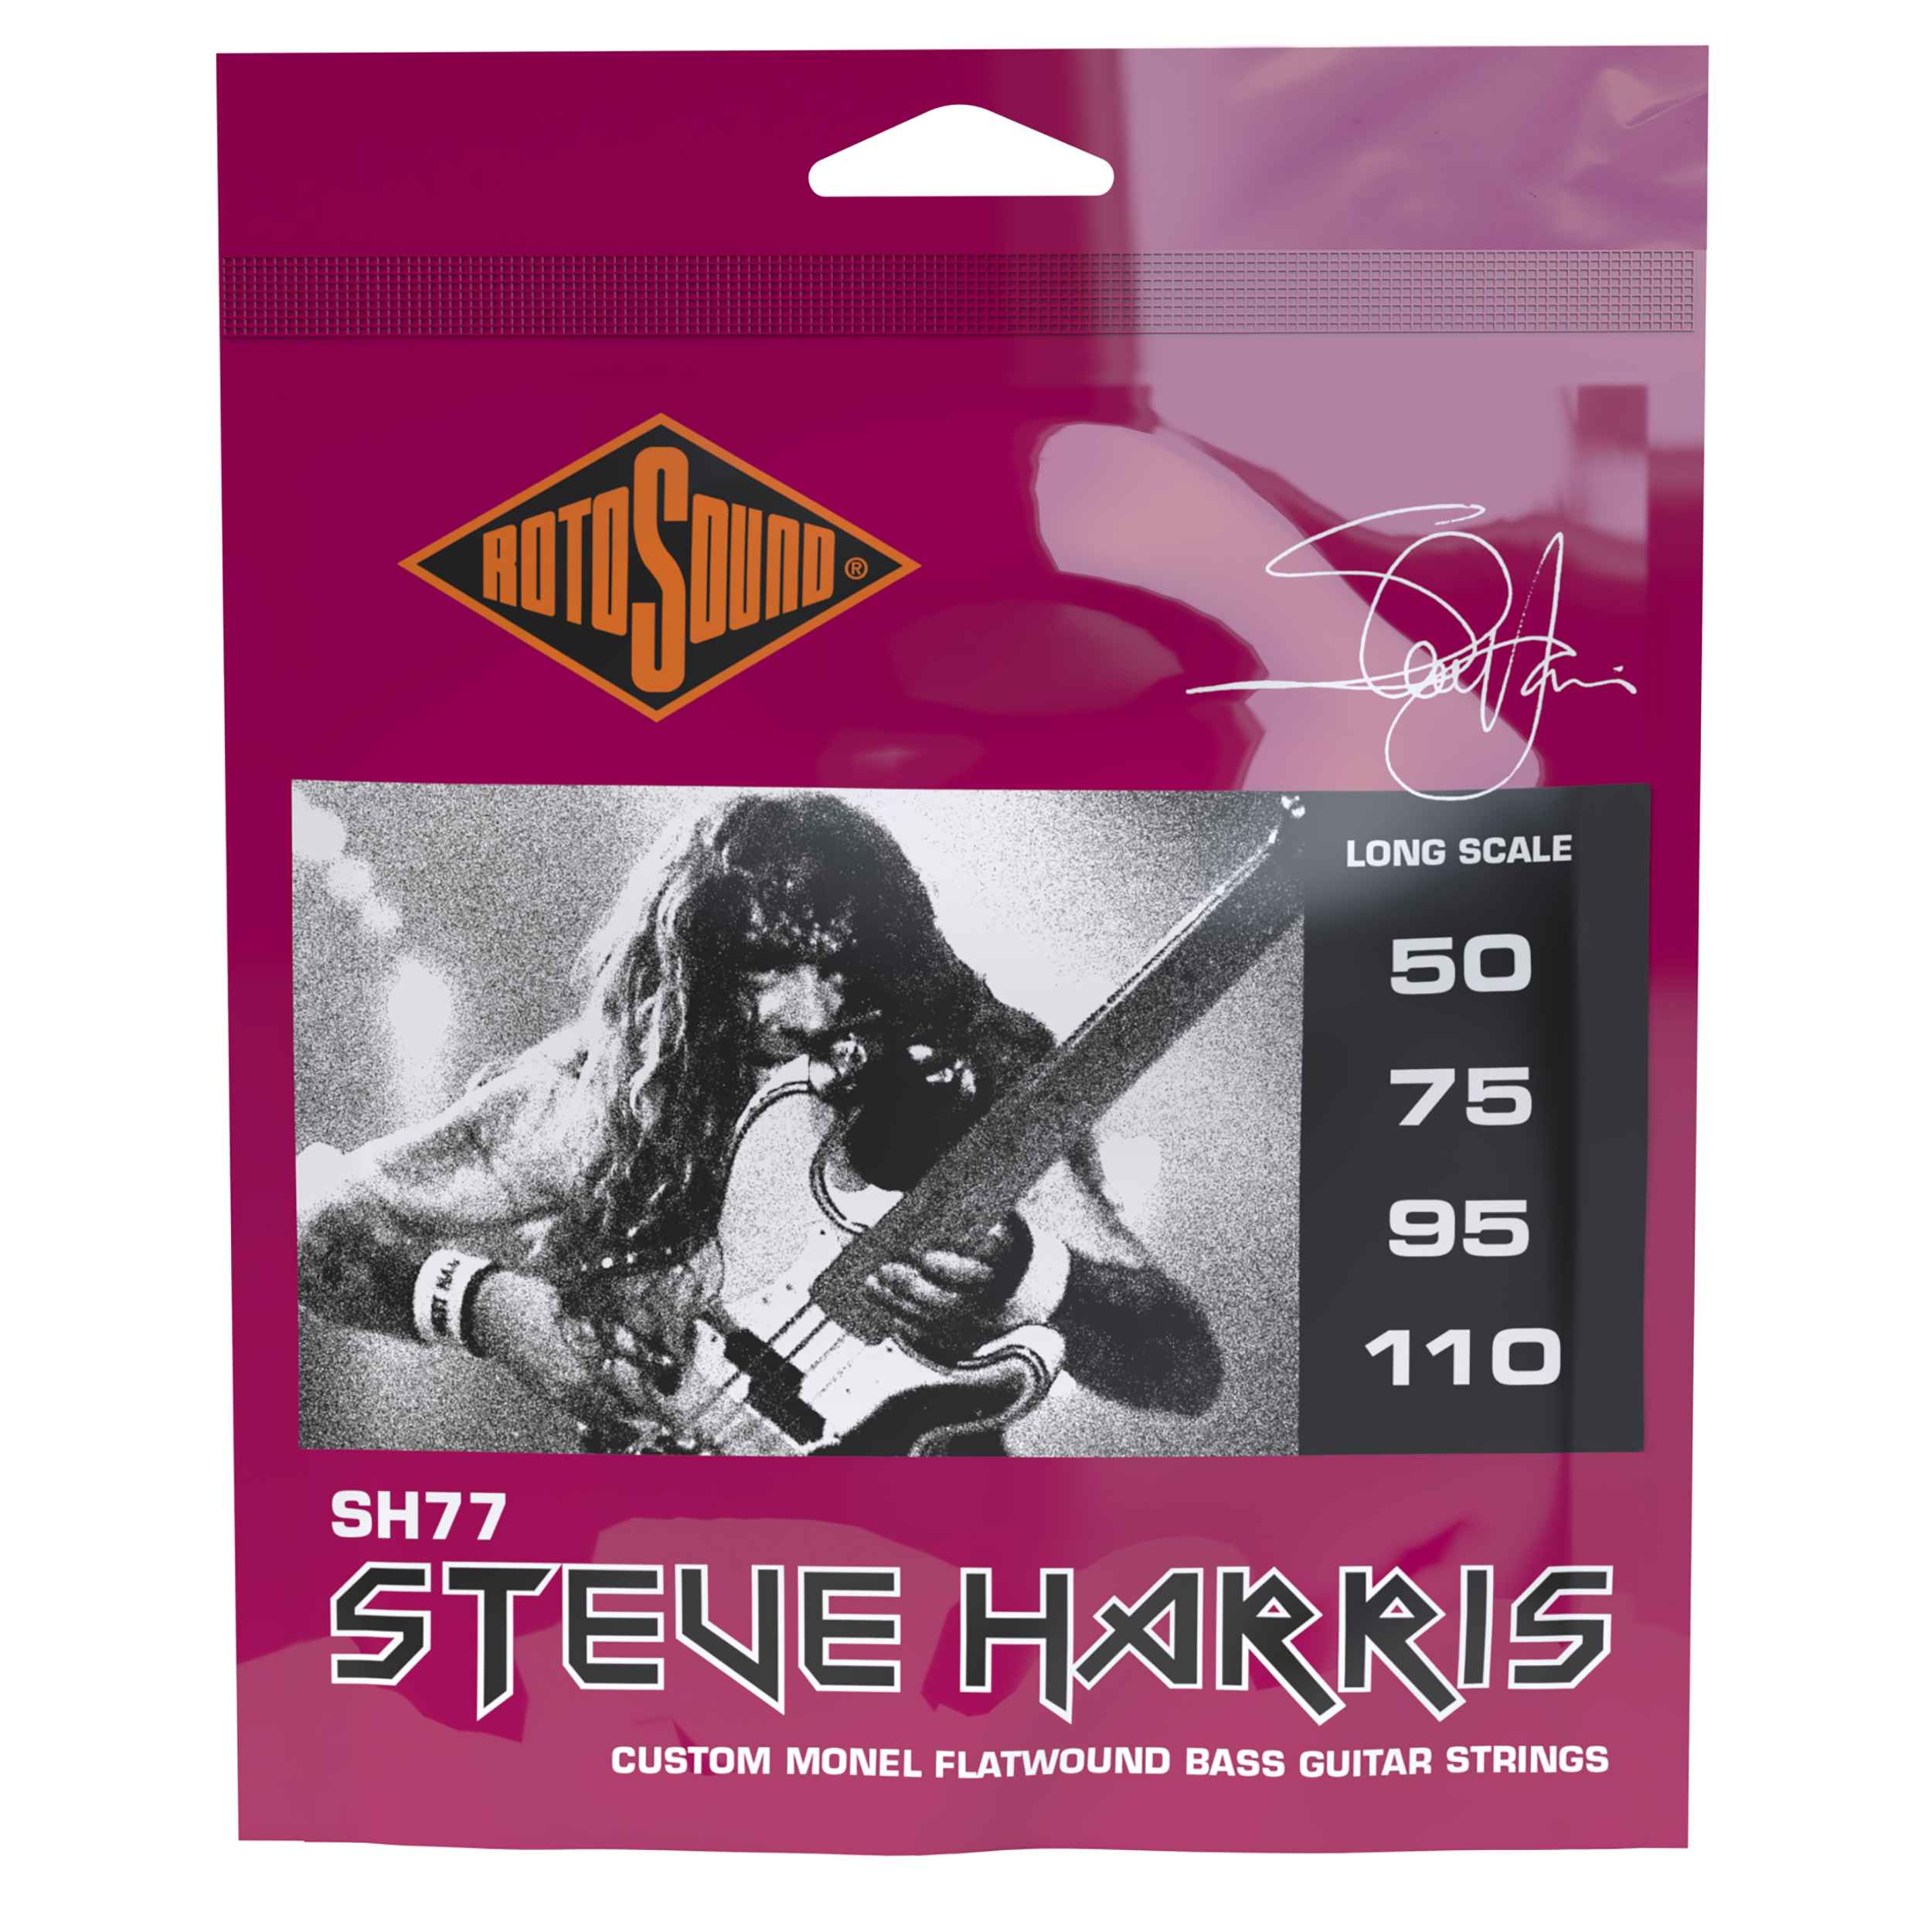 Steve Harris Custom Flatwound | 50-110 • Rotosound Music Strings